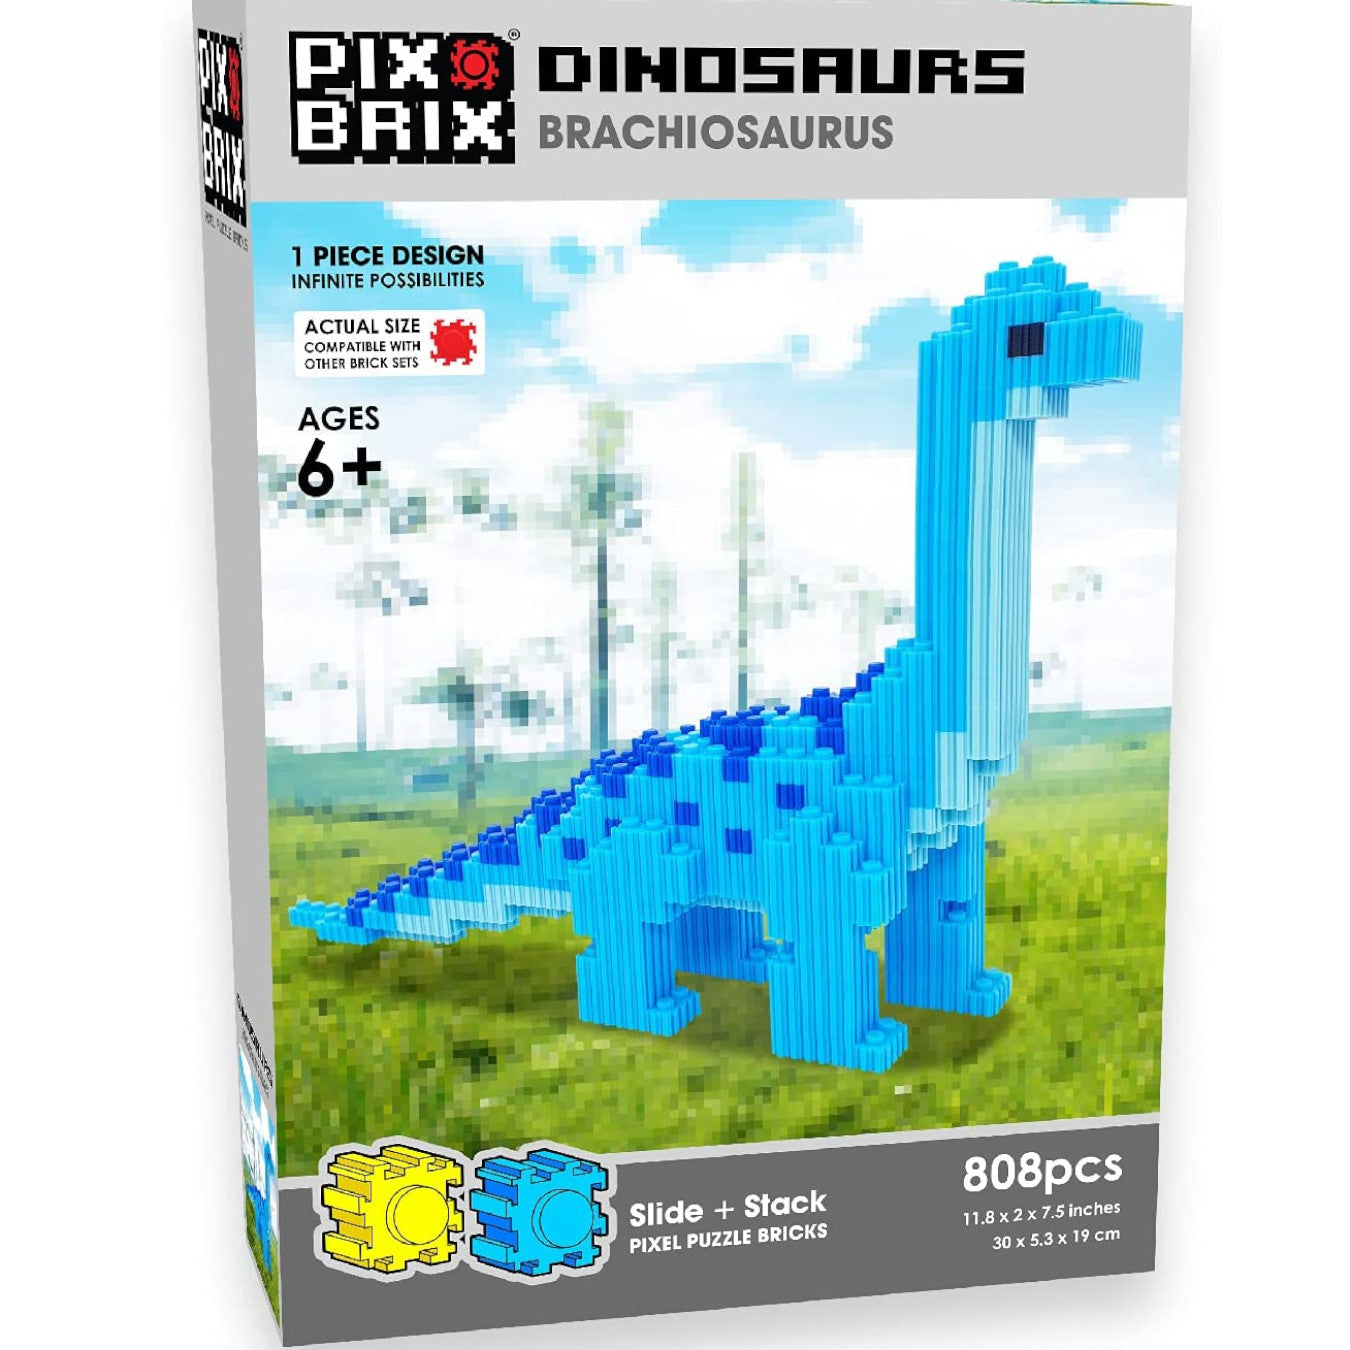 Pix Brix Dinosaur Brachiosaurus 808 pc